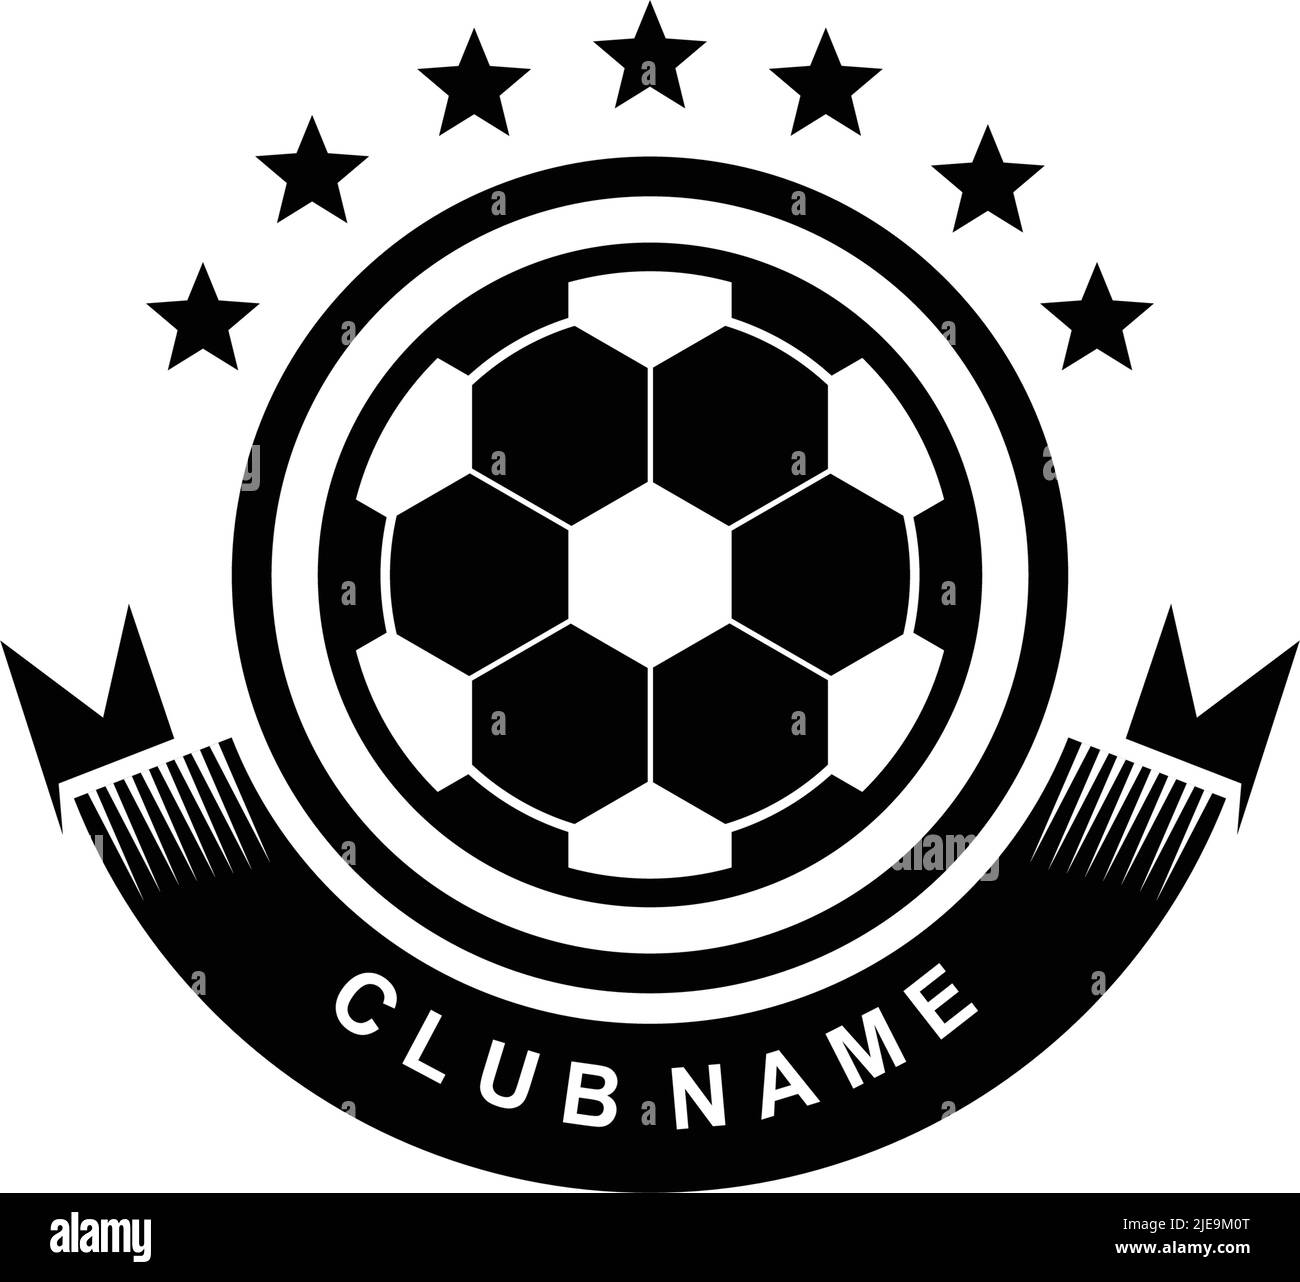 Football logo Black and White Stock Photos & Images - Alamy